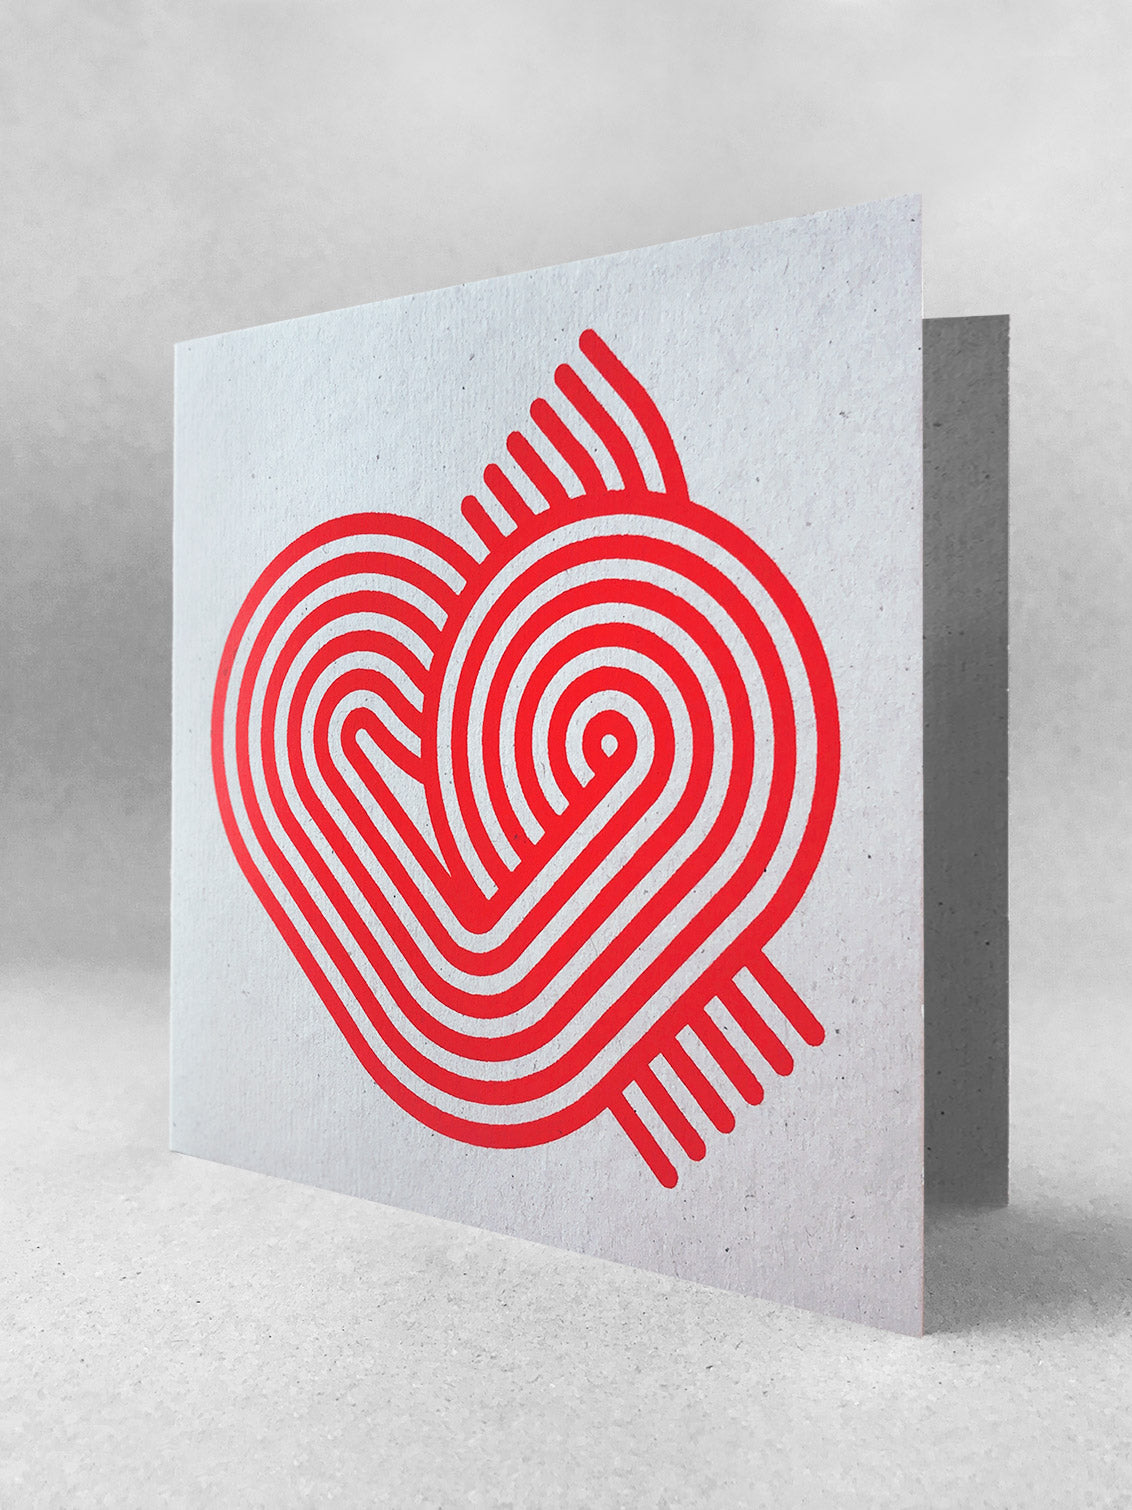 Salty’s Online 
Stripy heart on grey card